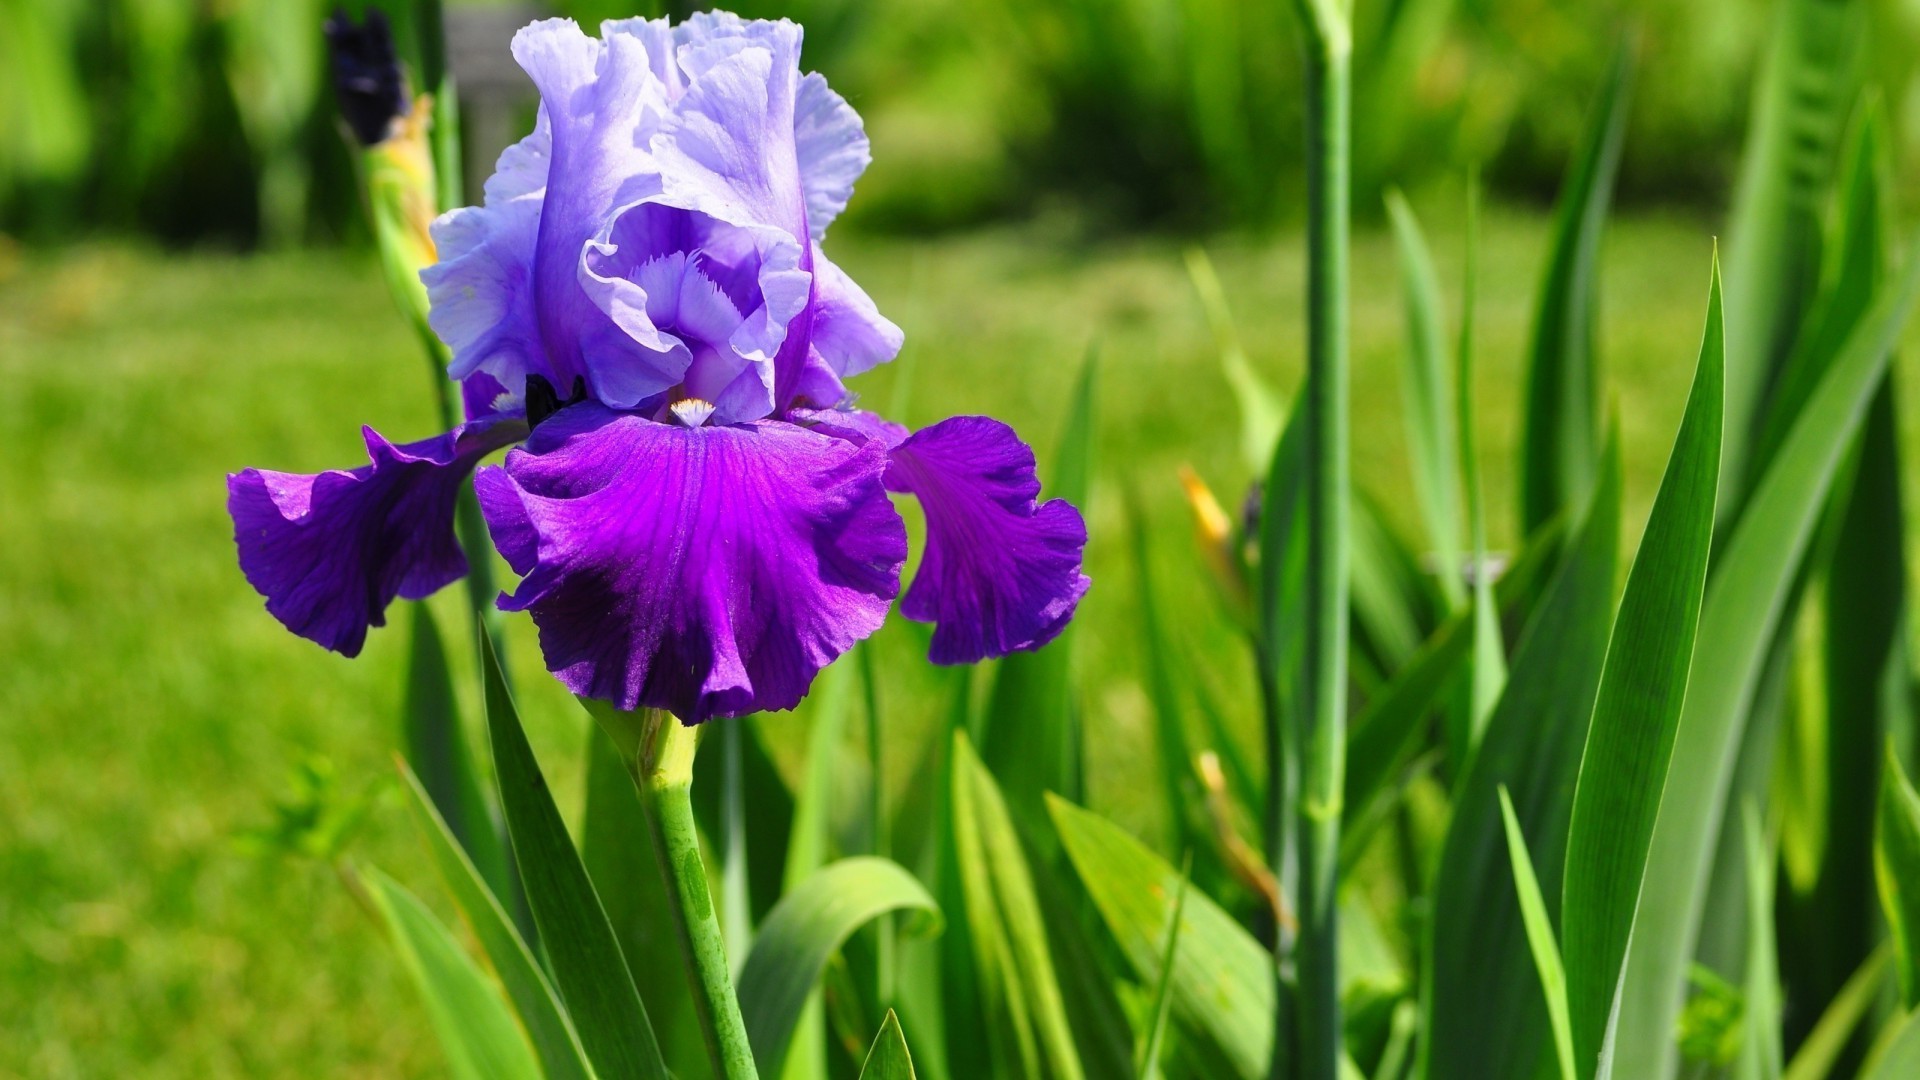 iris tapete,blume,blühende pflanze,lila,pflanze,blütenblatt